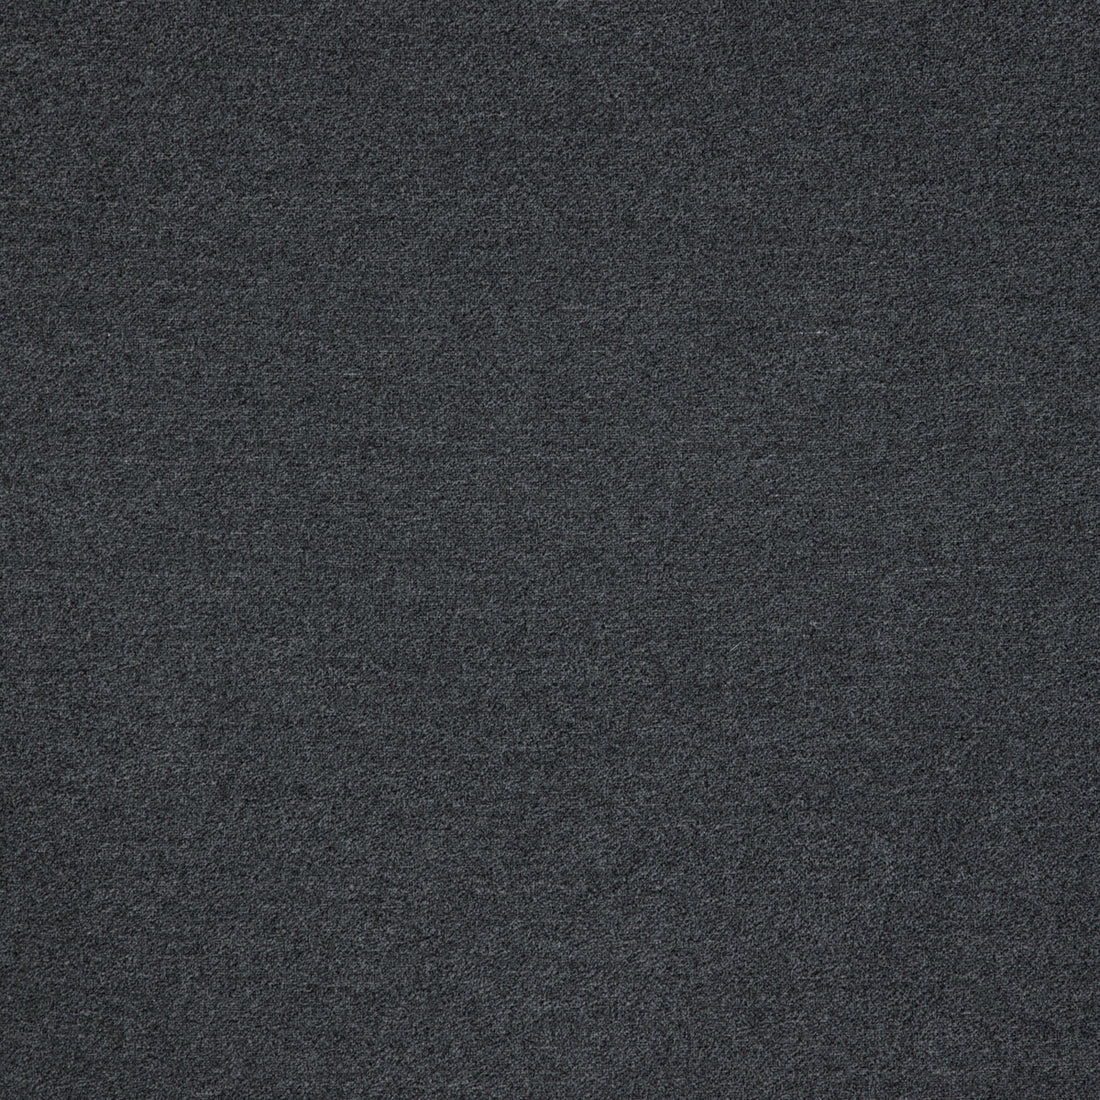 Kravet Smart fabric in 37000-2121 color - pattern 37000.2121.0 - by Kravet Smart in the Performance Kravetarmor collection